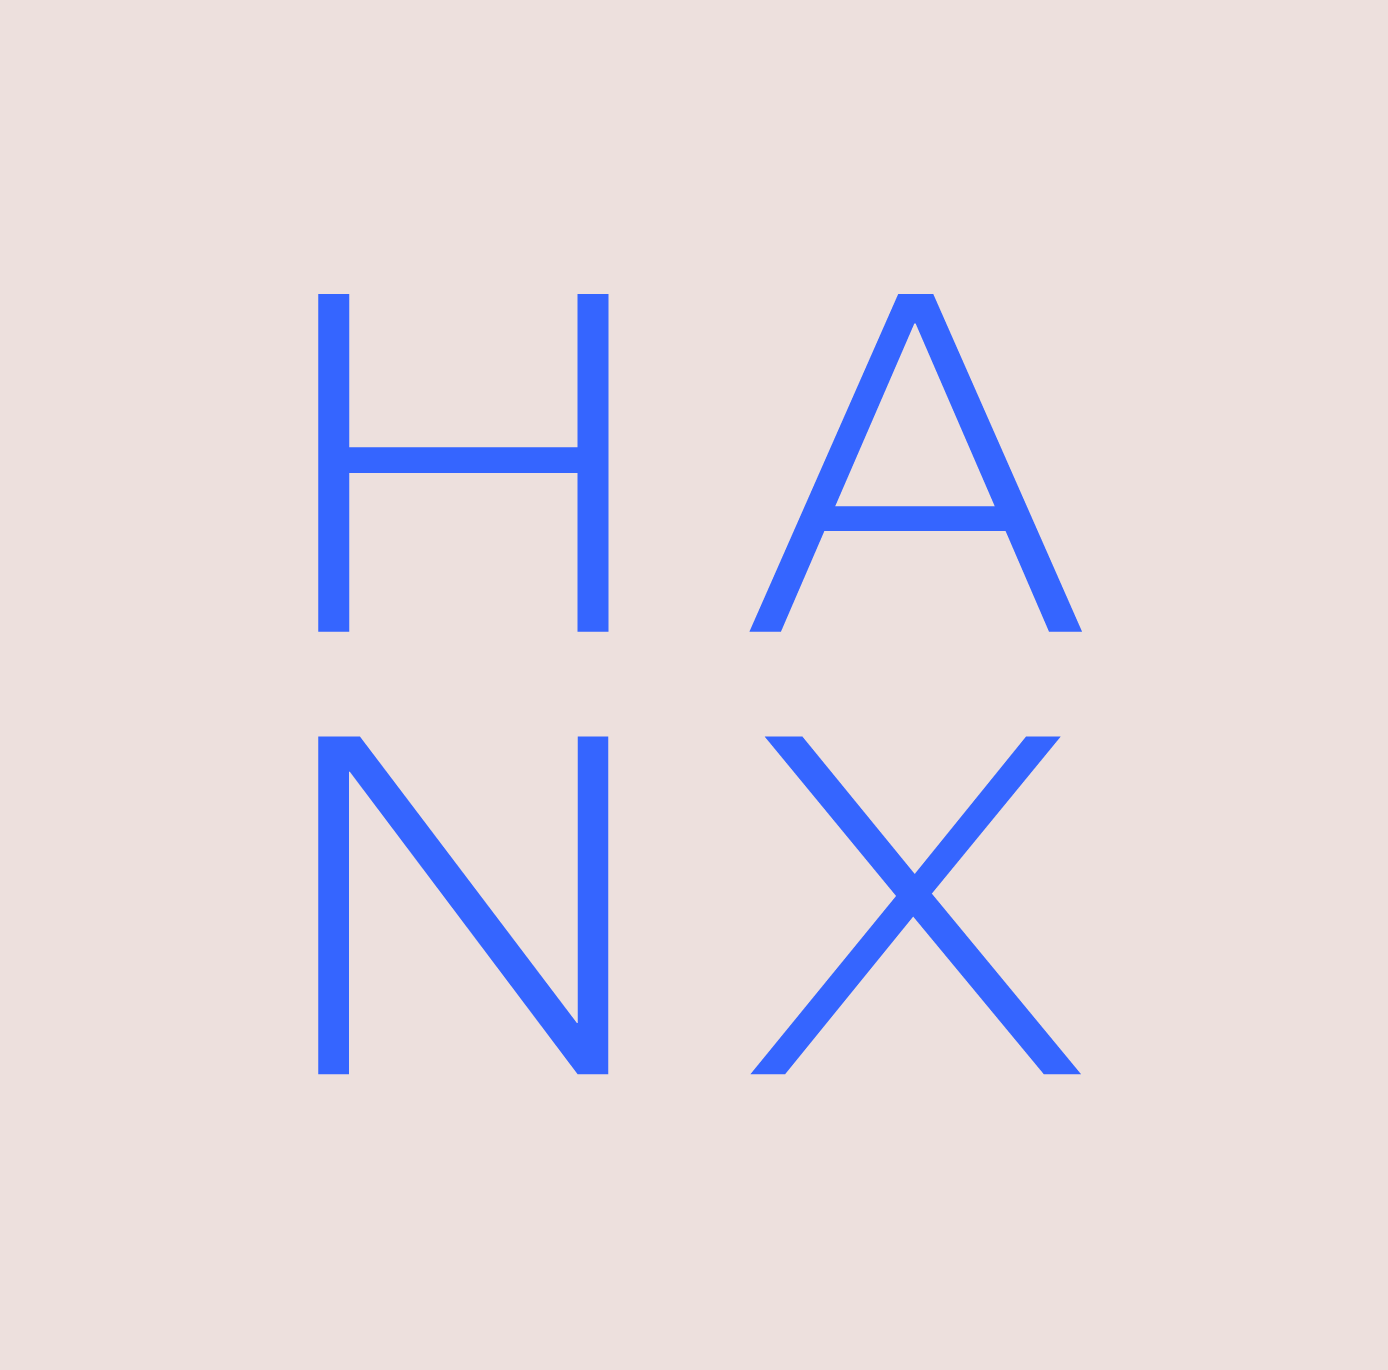 Hanx_Logo_square-01.png